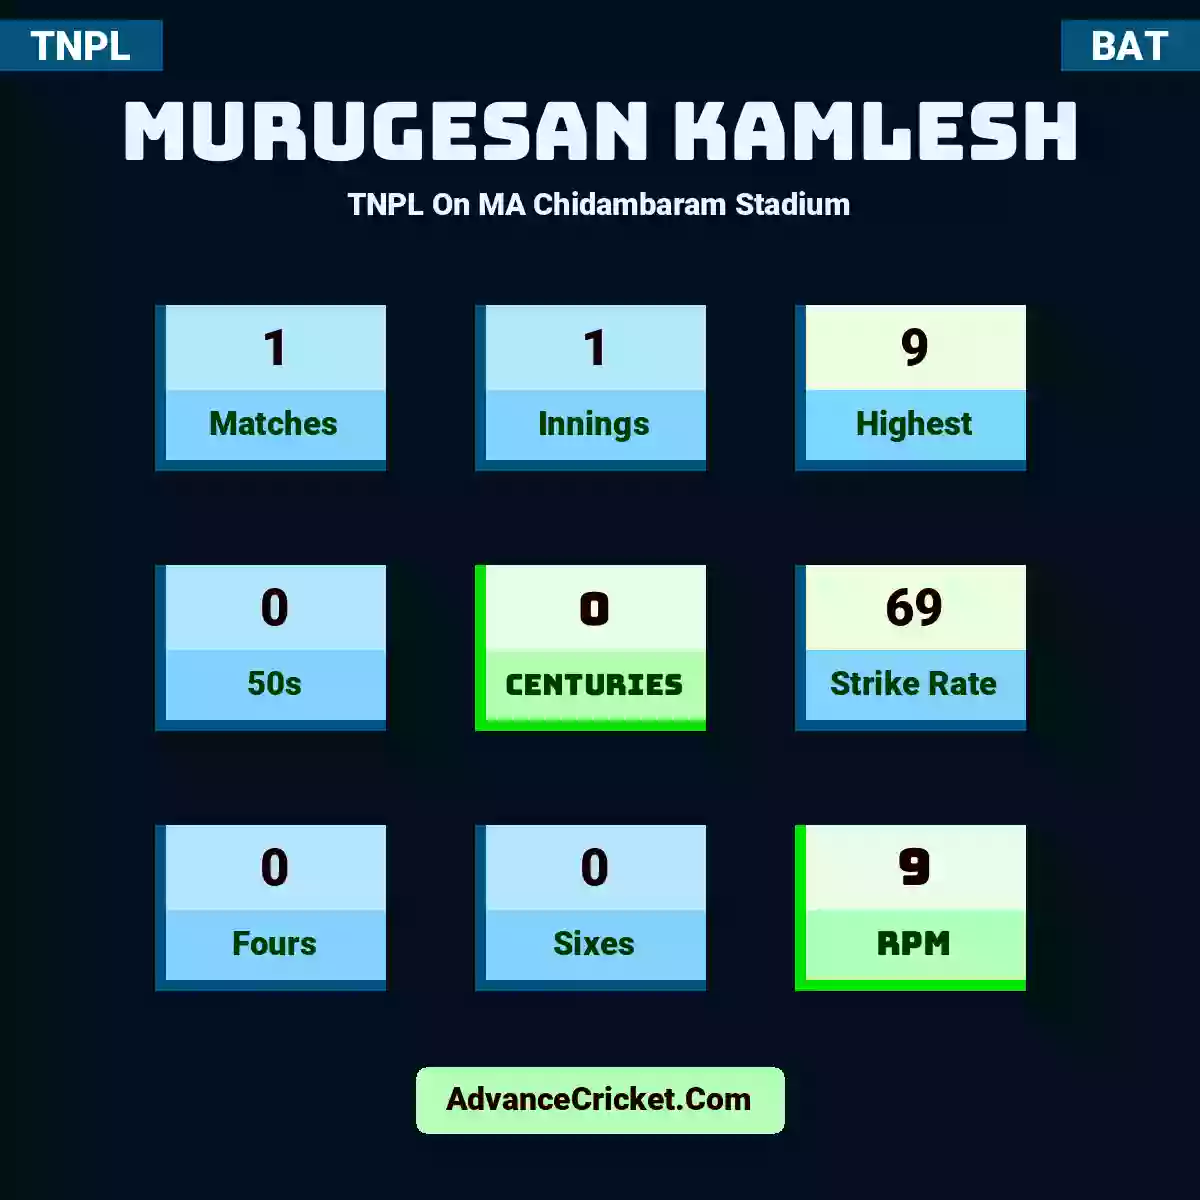 Murugesan Kamlesh TNPL  On MA Chidambaram Stadium, Murugesan Kamlesh played 1 matches, scored 9 runs as highest, 0 half-centuries, and 0 centuries, with a strike rate of 69. M.Kamlesh hit 0 fours and 0 sixes, with an RPM of 9.